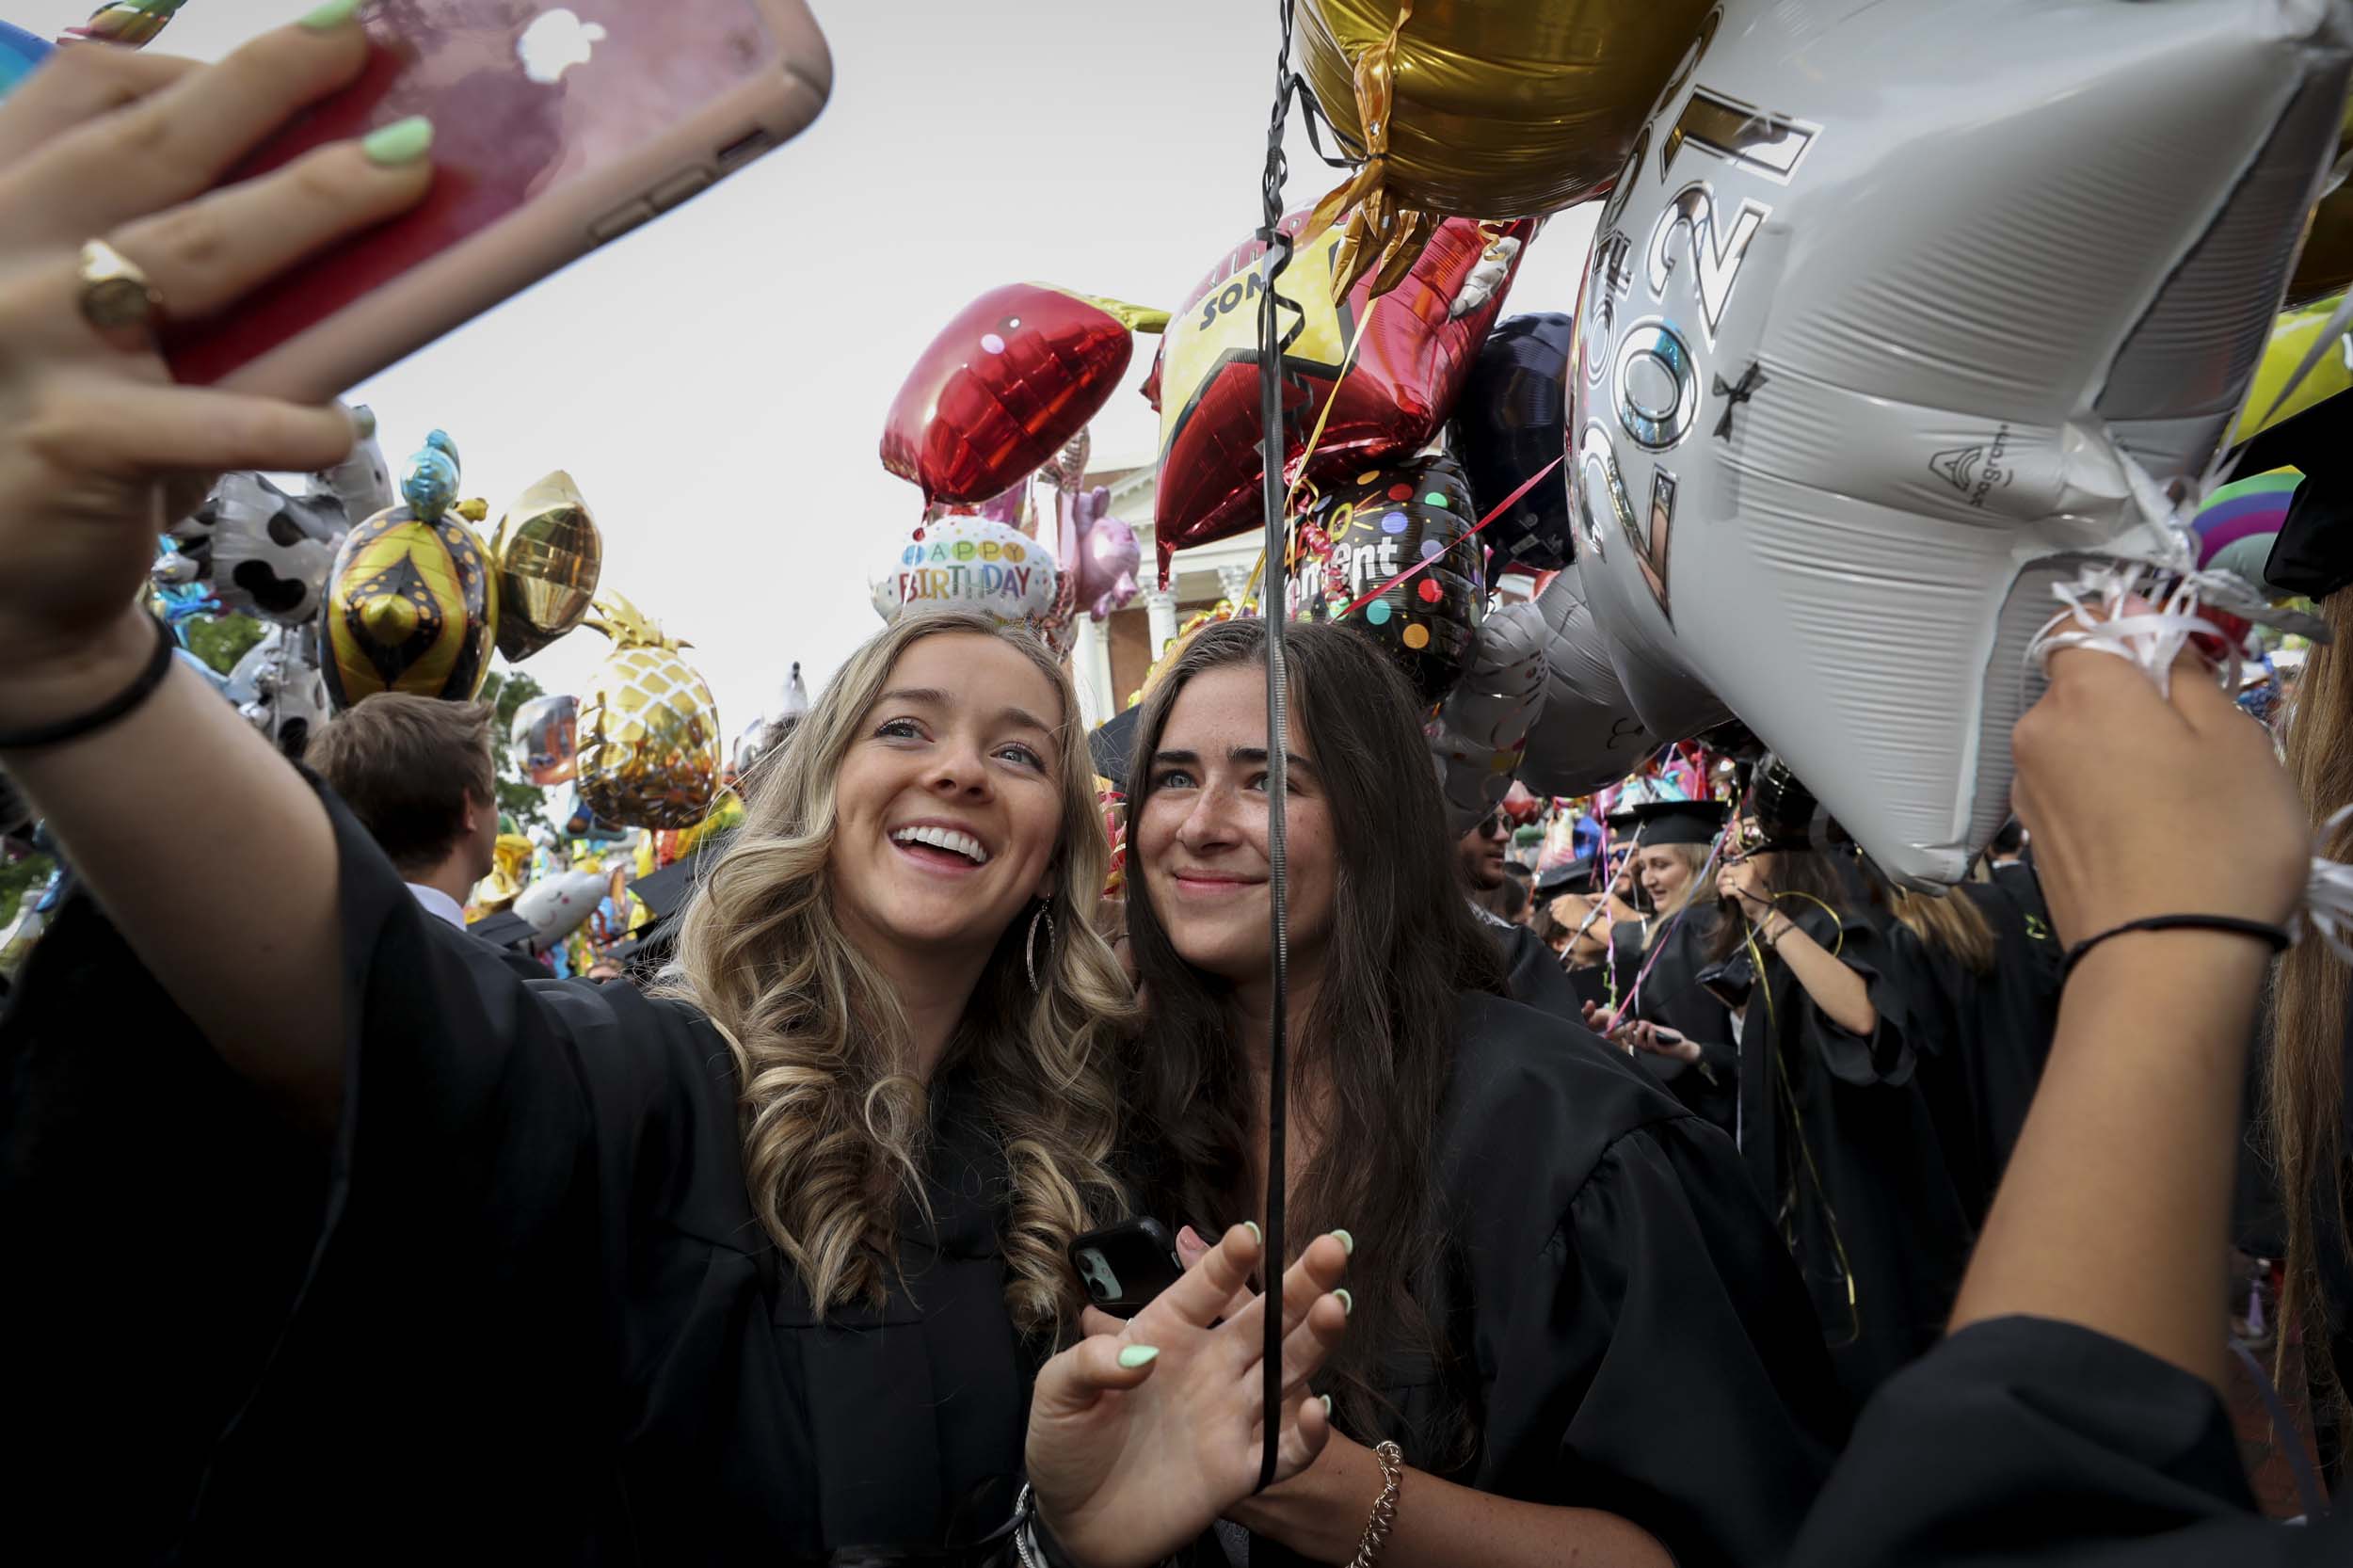 Graduates pose together for a selfie